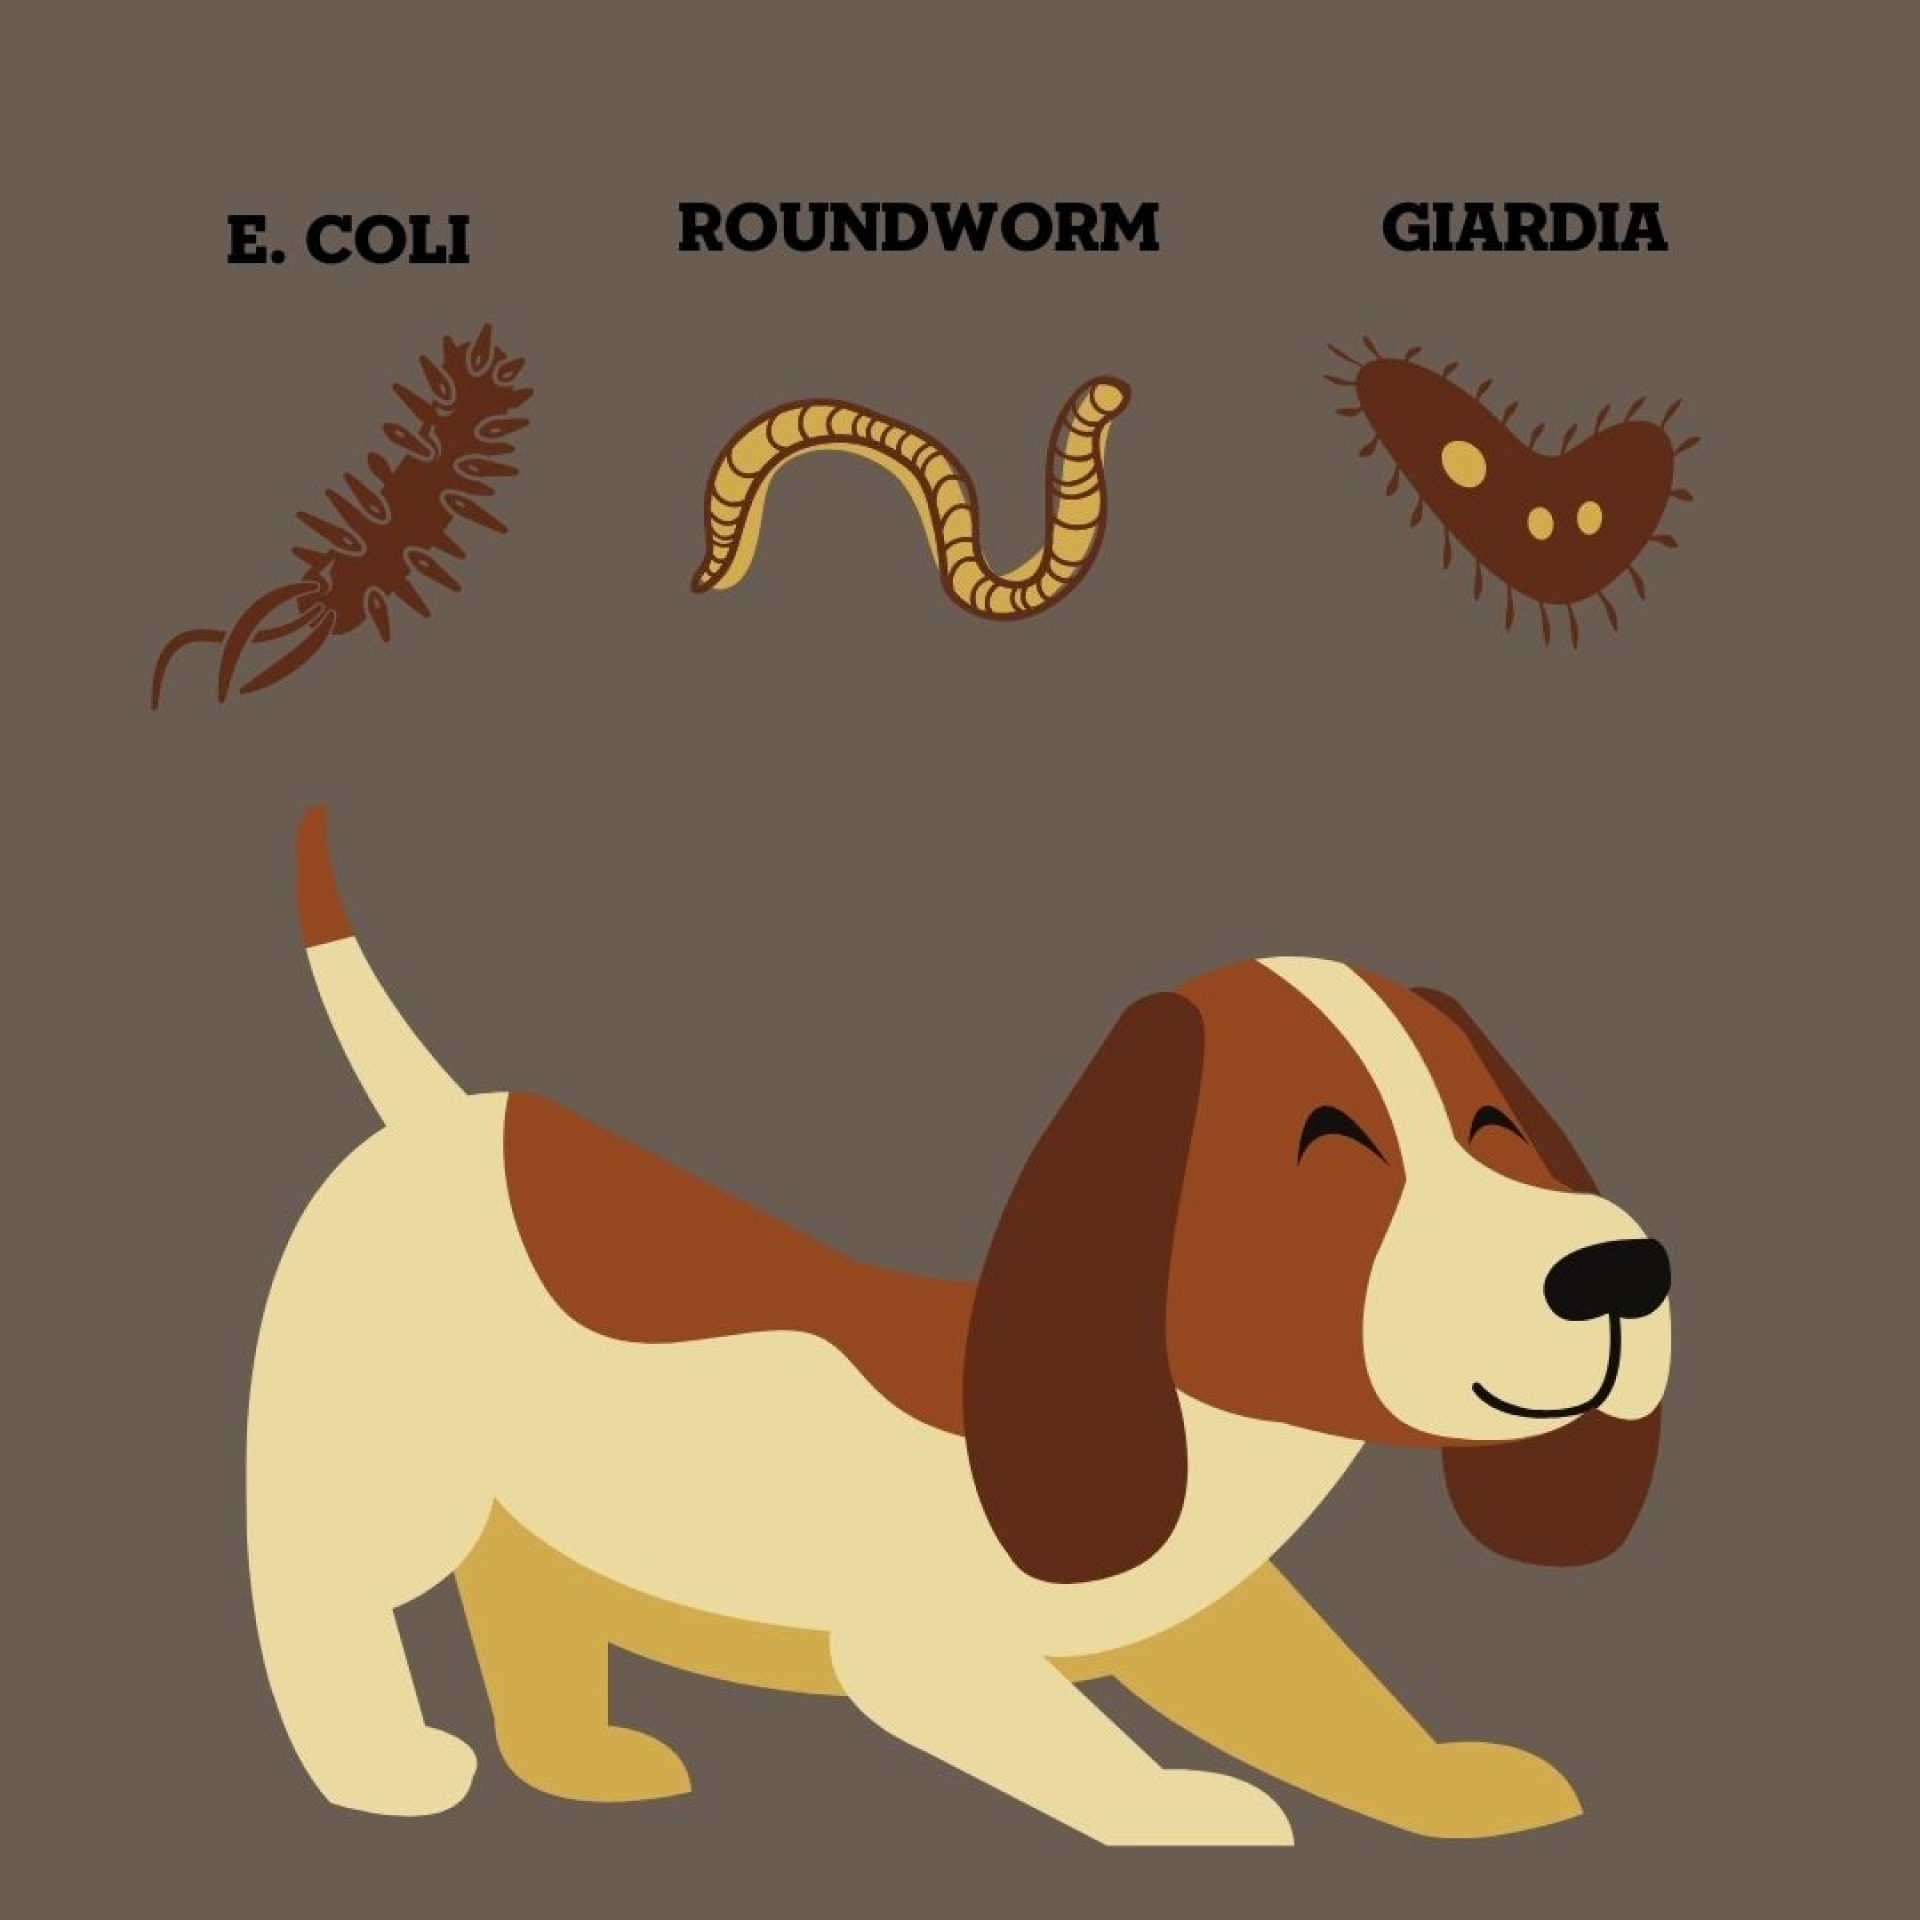 Parasites in dog poop.